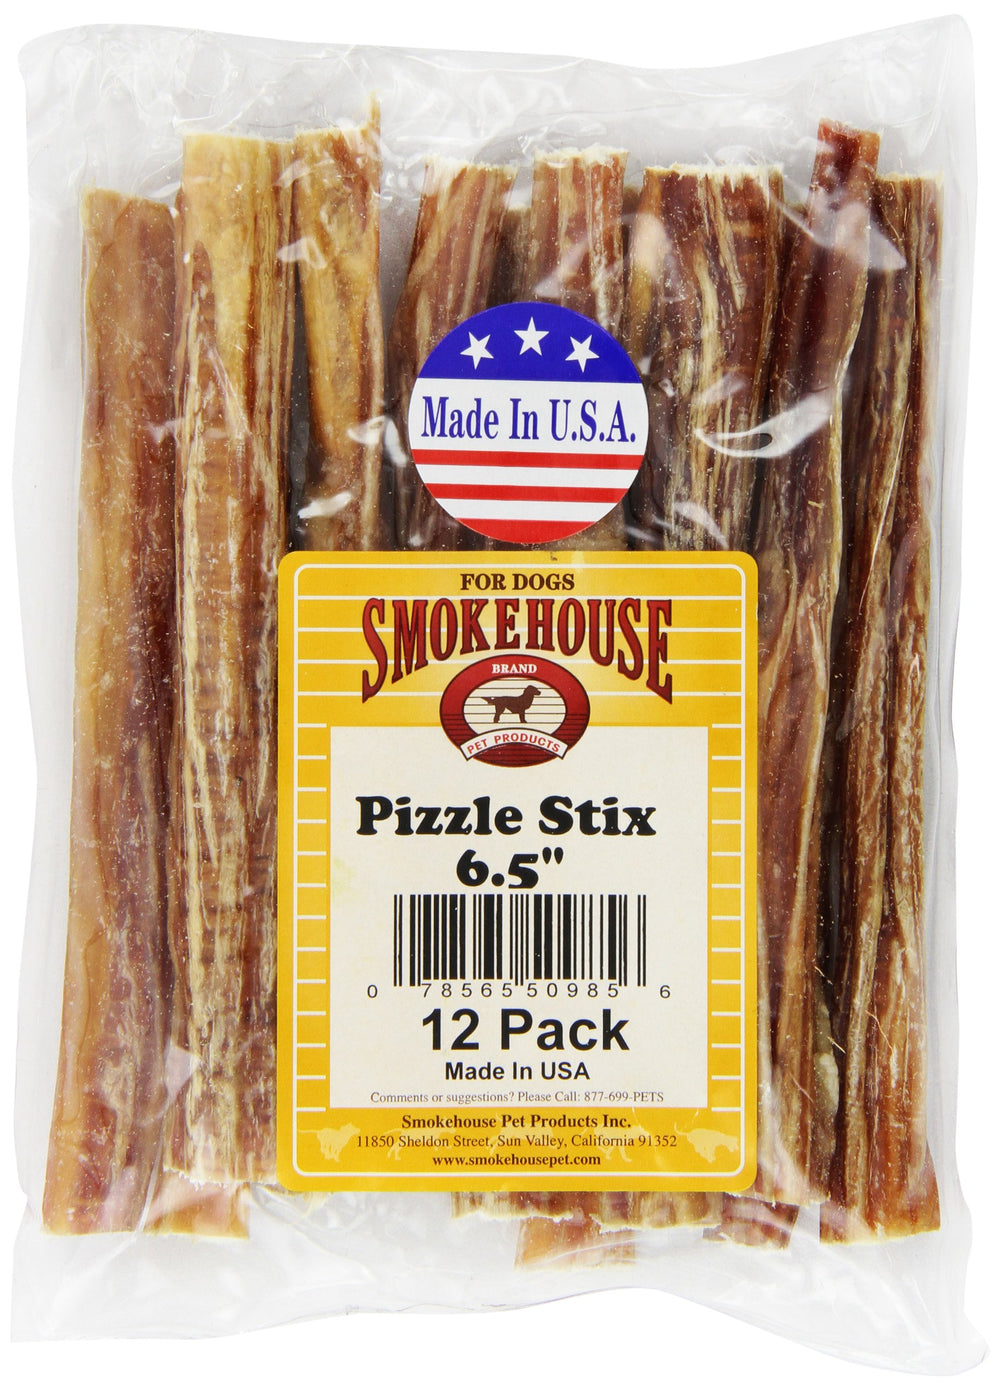 Smokehouse Pizzle Stixs Dog Treats, 12-Pack